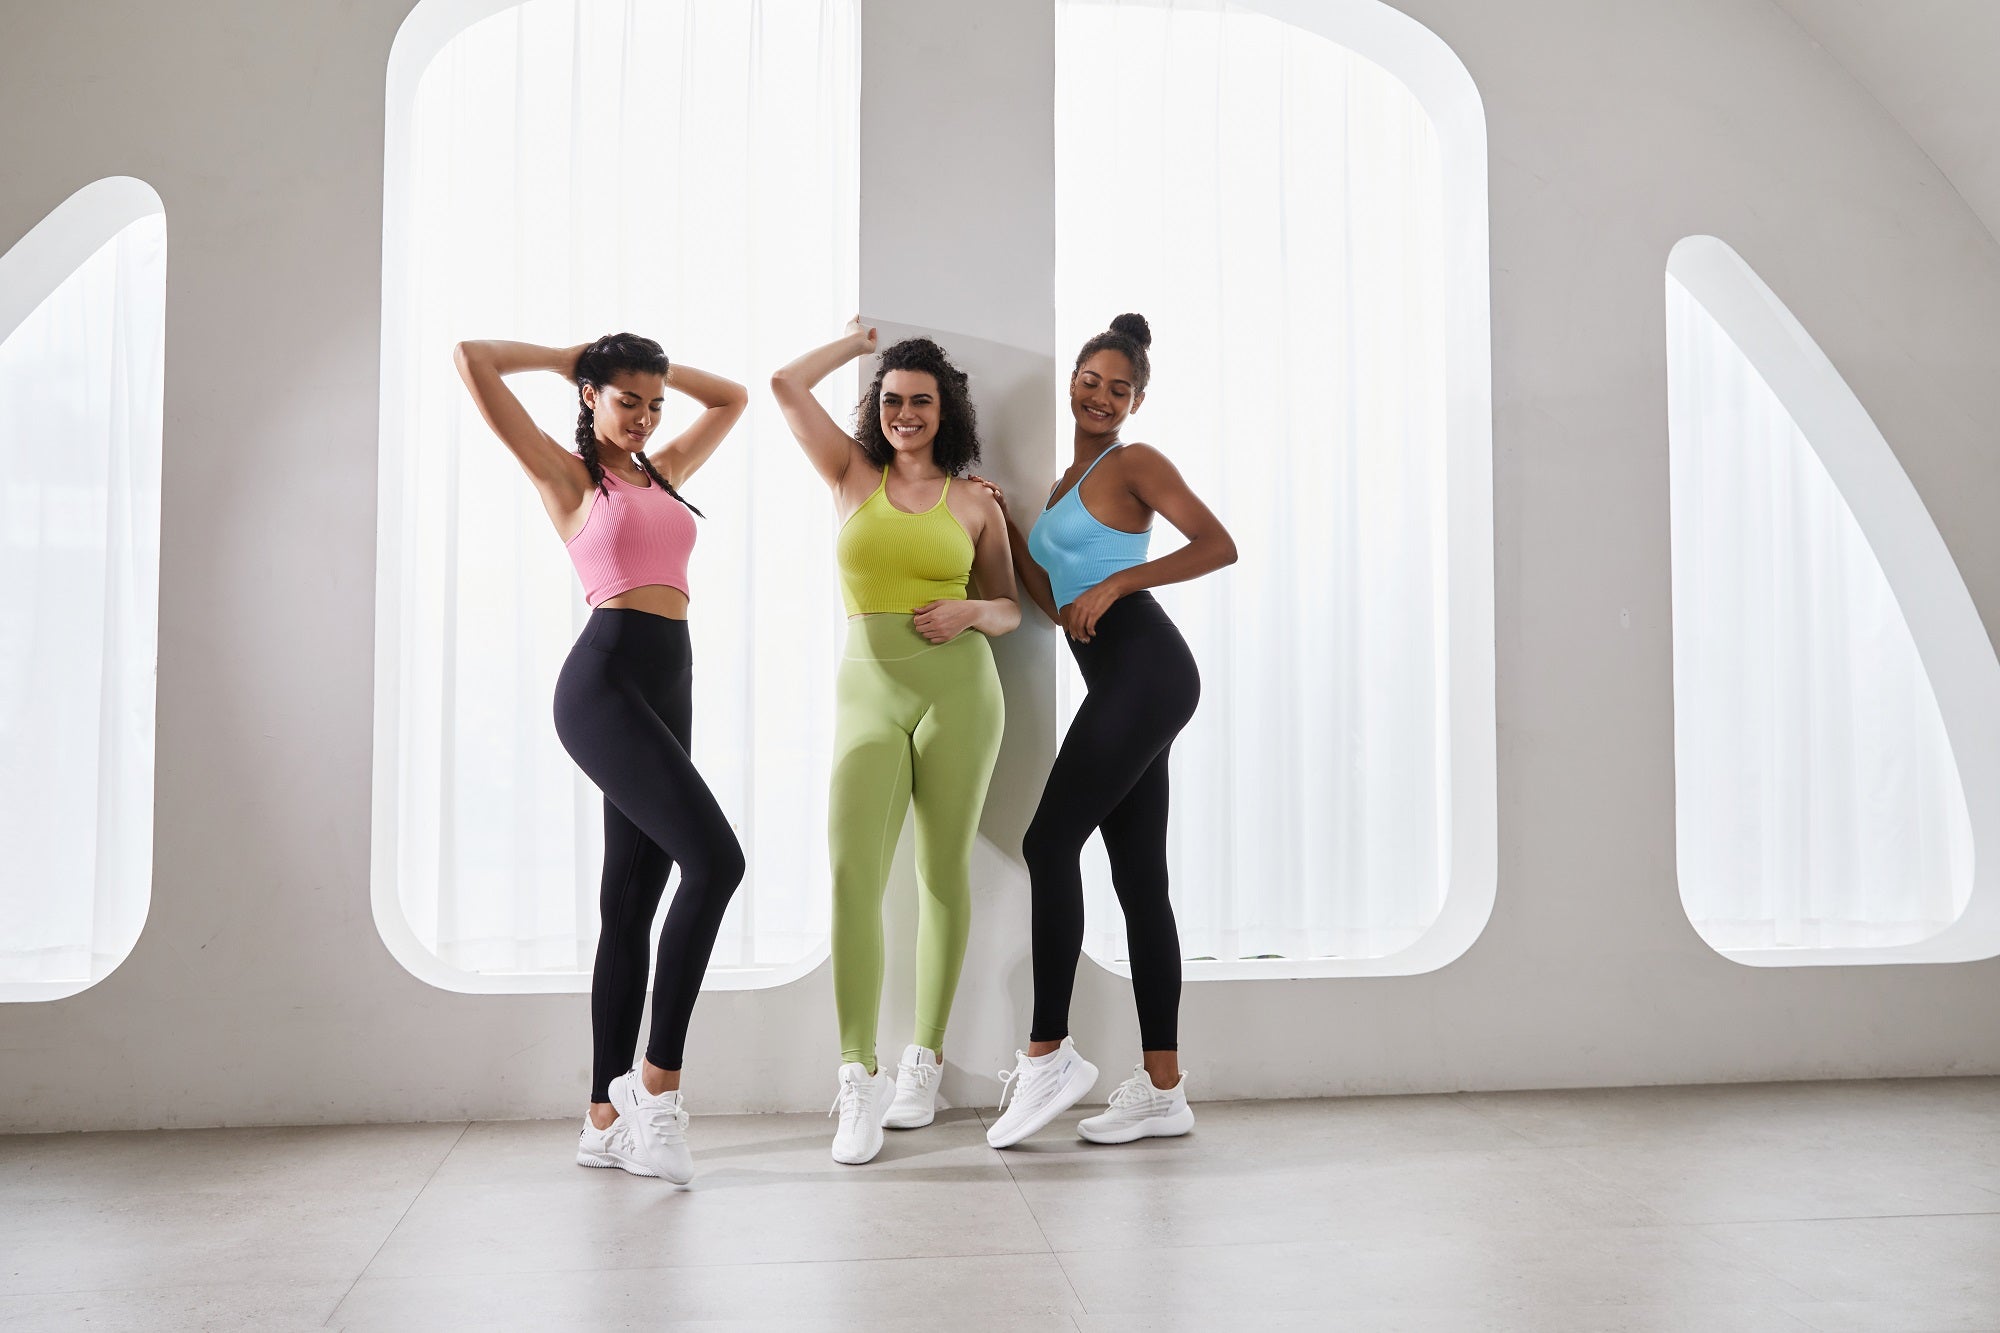  Sunzel Workout Leggings For Women, Squat Proof High Waisted Yoga  Pants 4 Way Stretch, Buttery Soft V Cross Waist